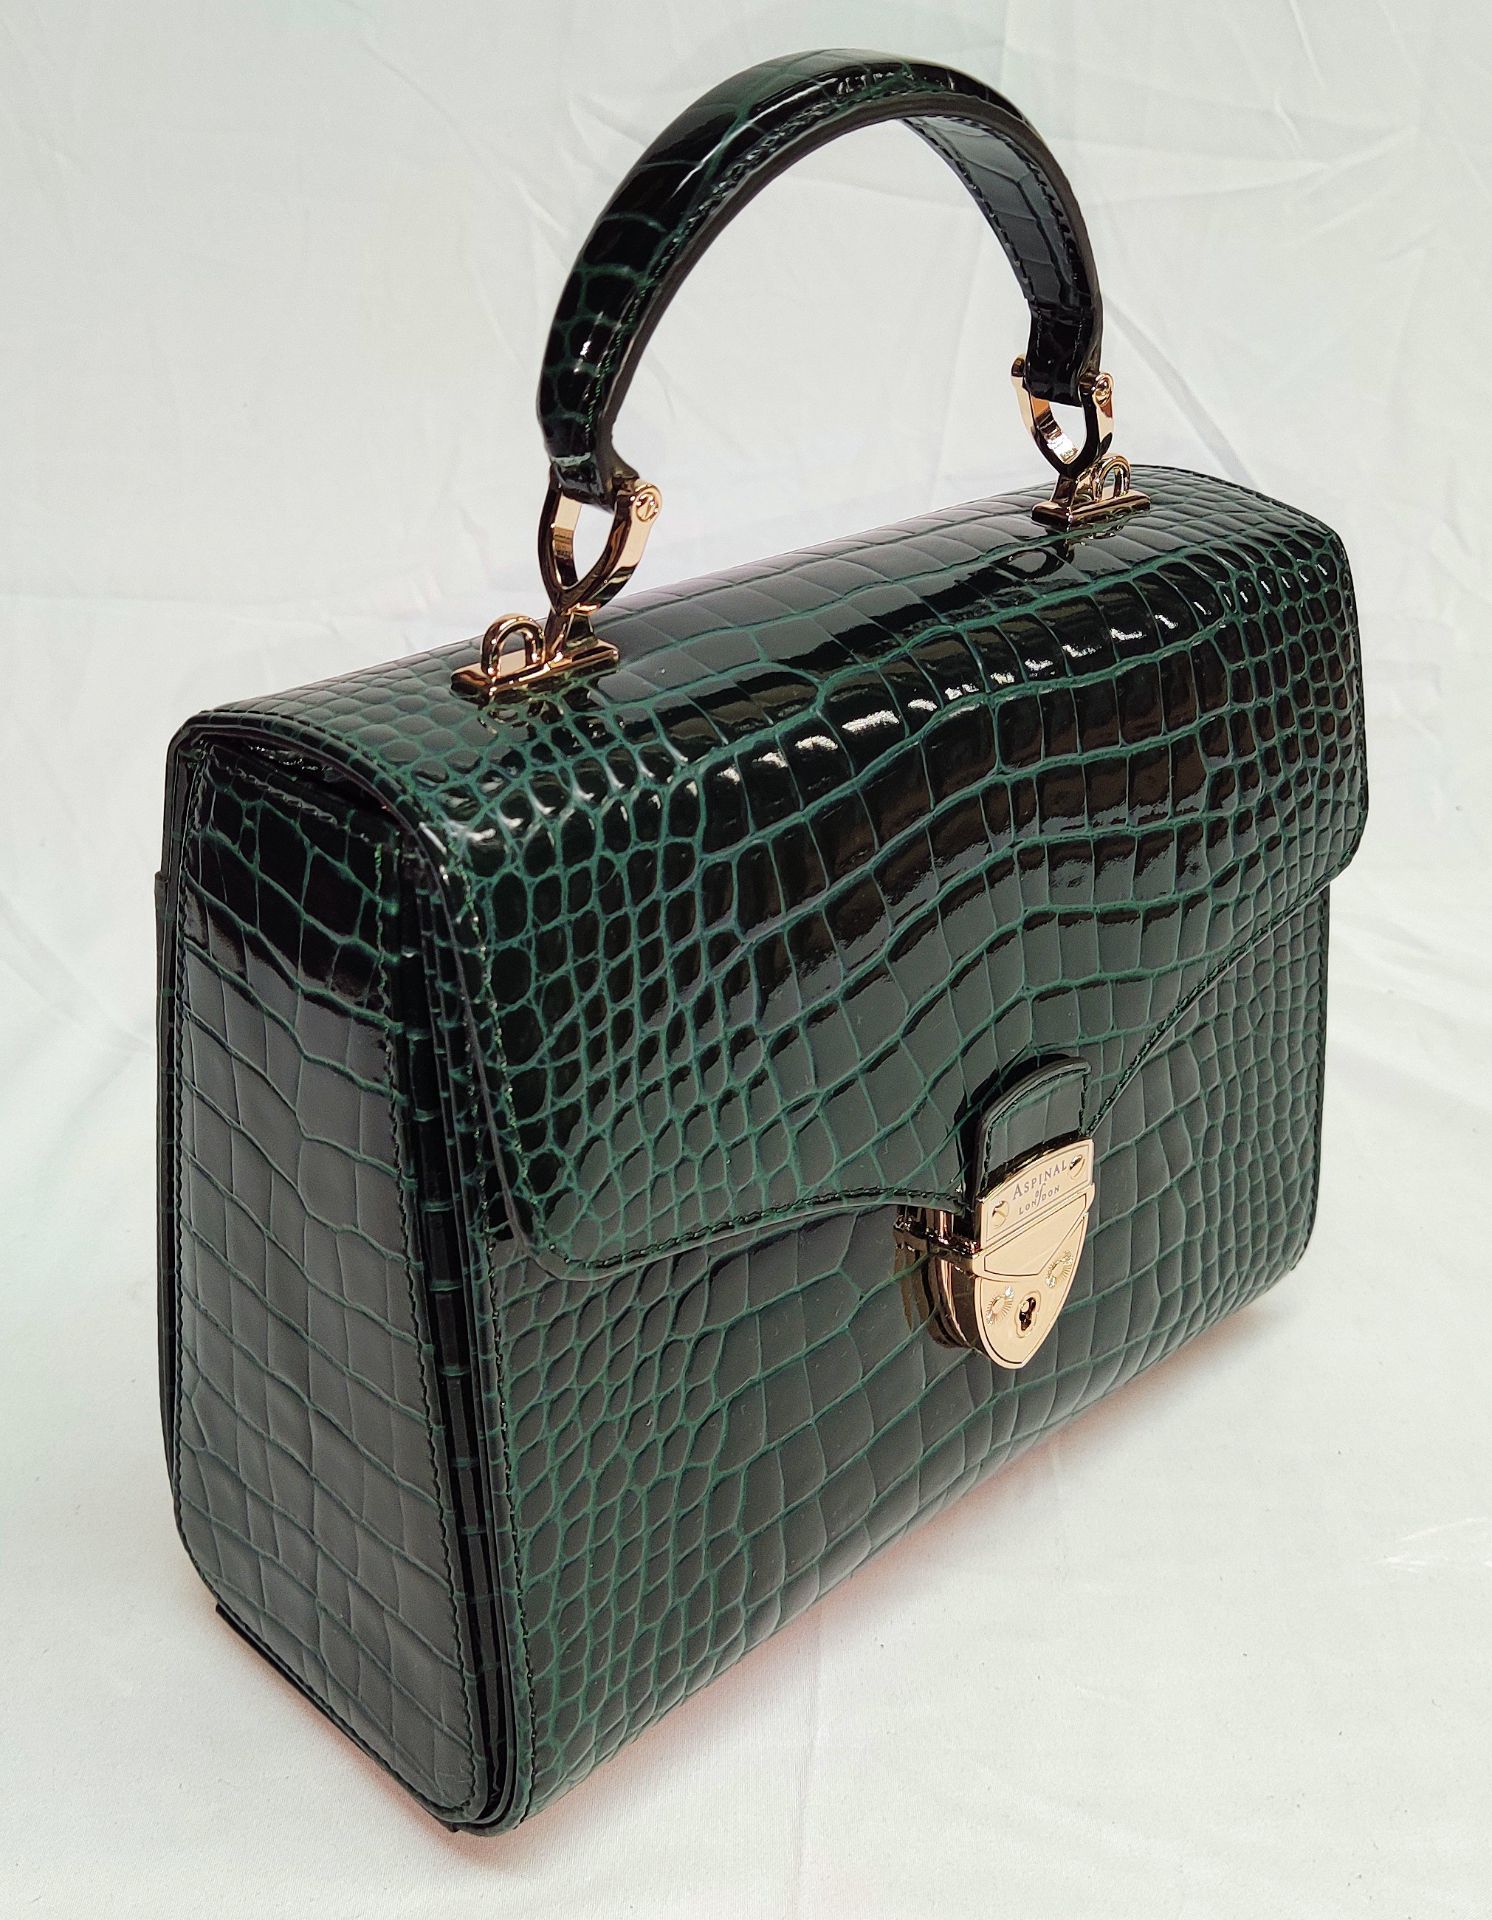 1 x ASPINAL OF LONDON Mayfair Bag - Evergreen Patent Croc - Original RRP £695.00 - Image 2 of 23